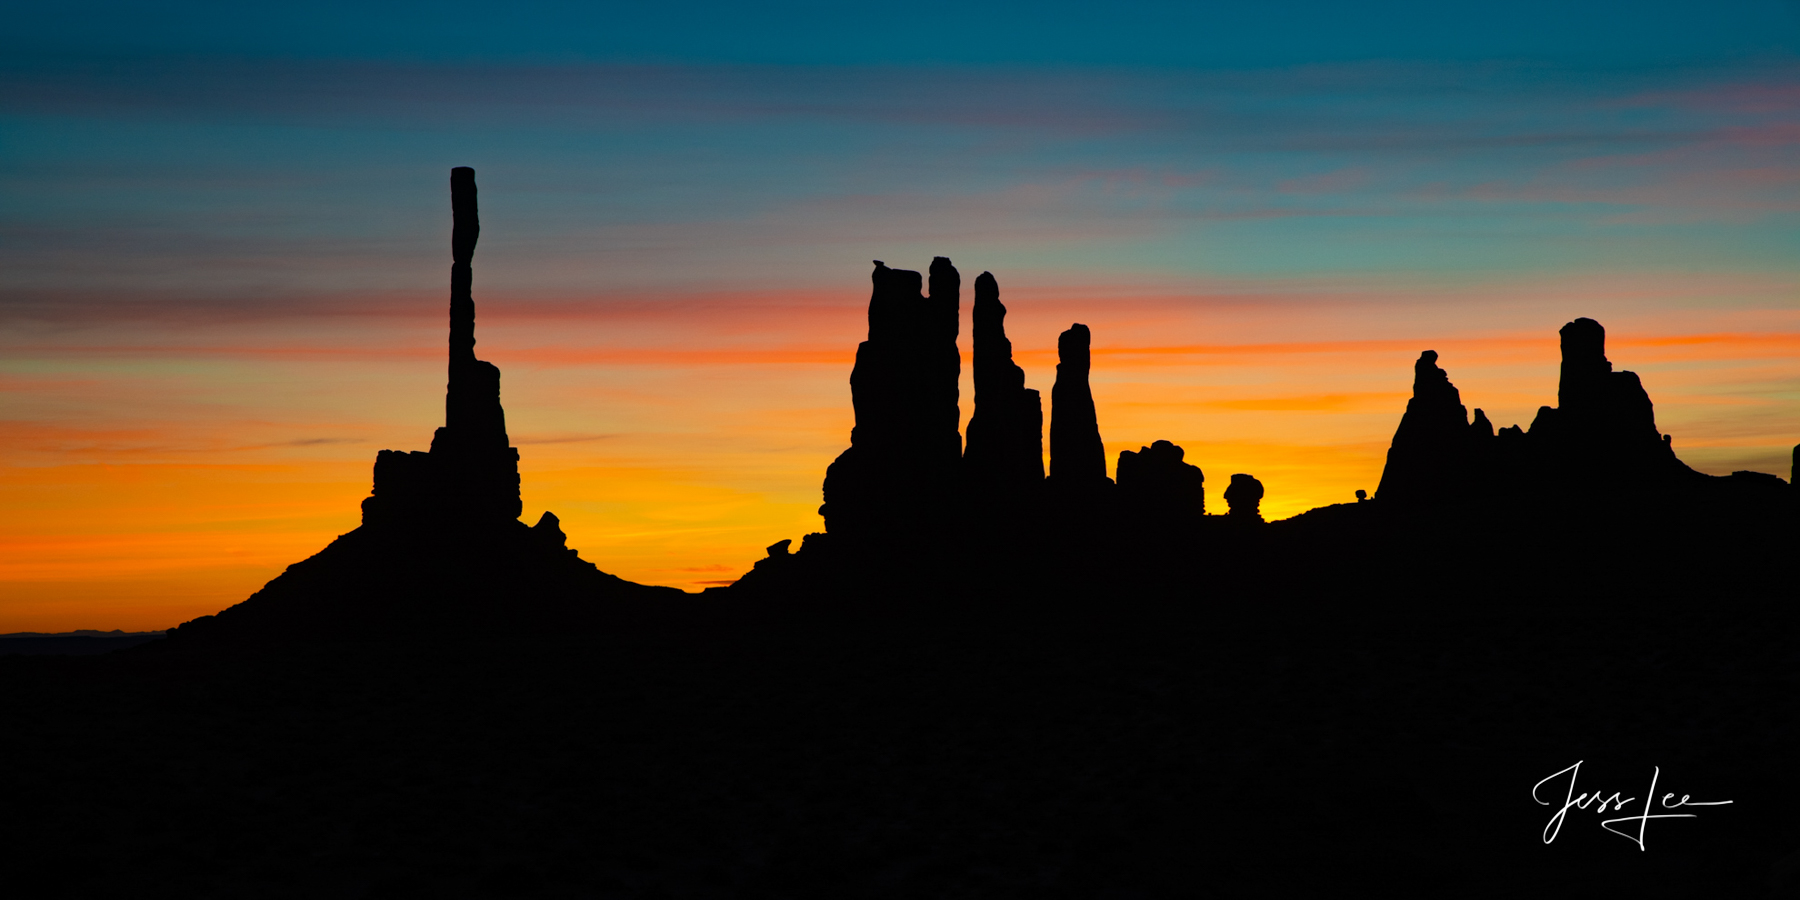 Sunrise set against Totem Rocks in Arizona 